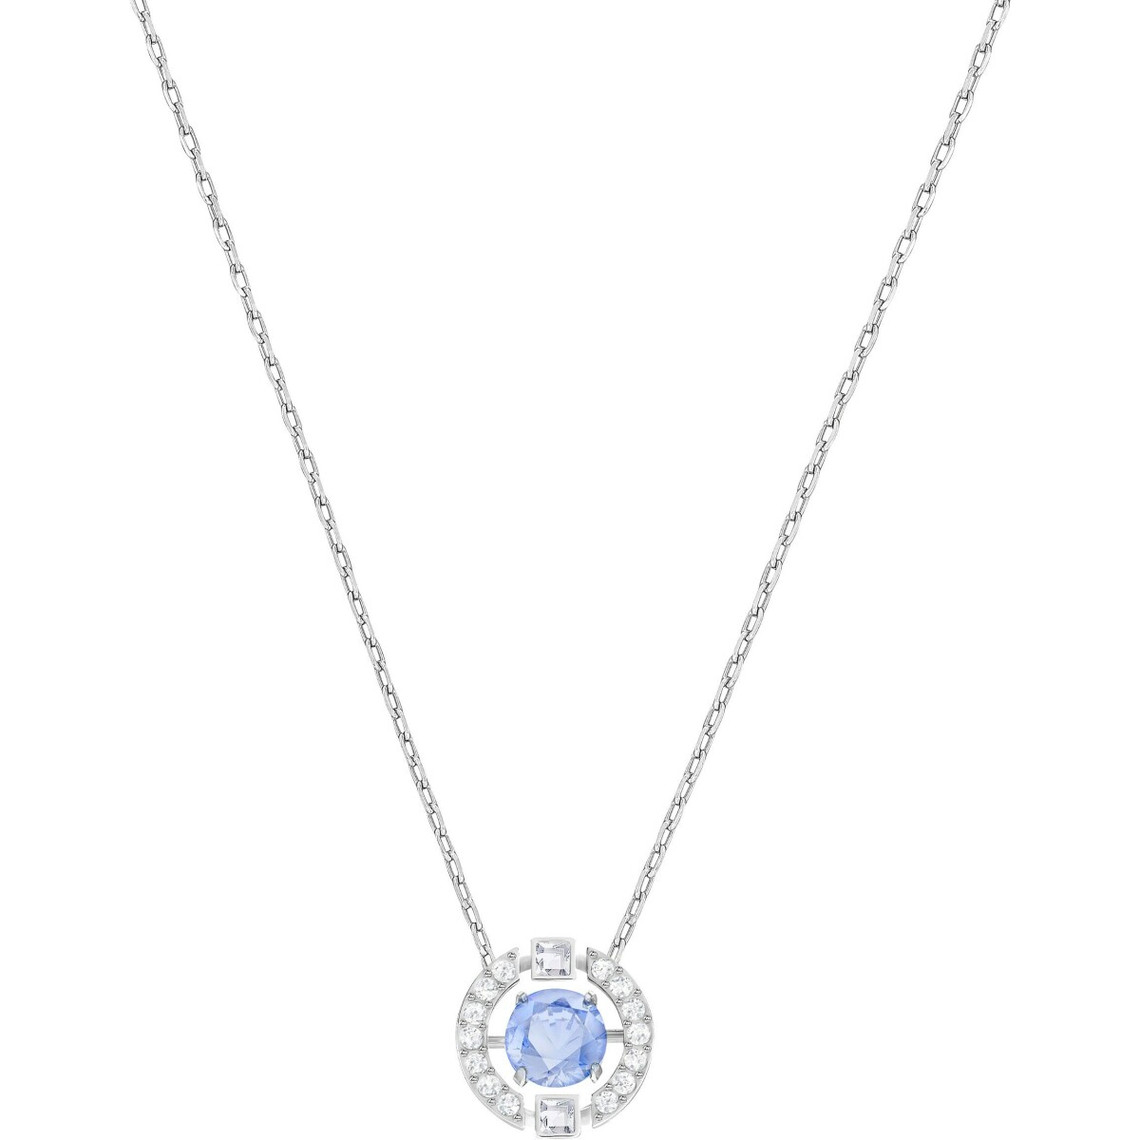 collier et pendentif swarovski bijoux 5279425 - acier cristal bleu femme